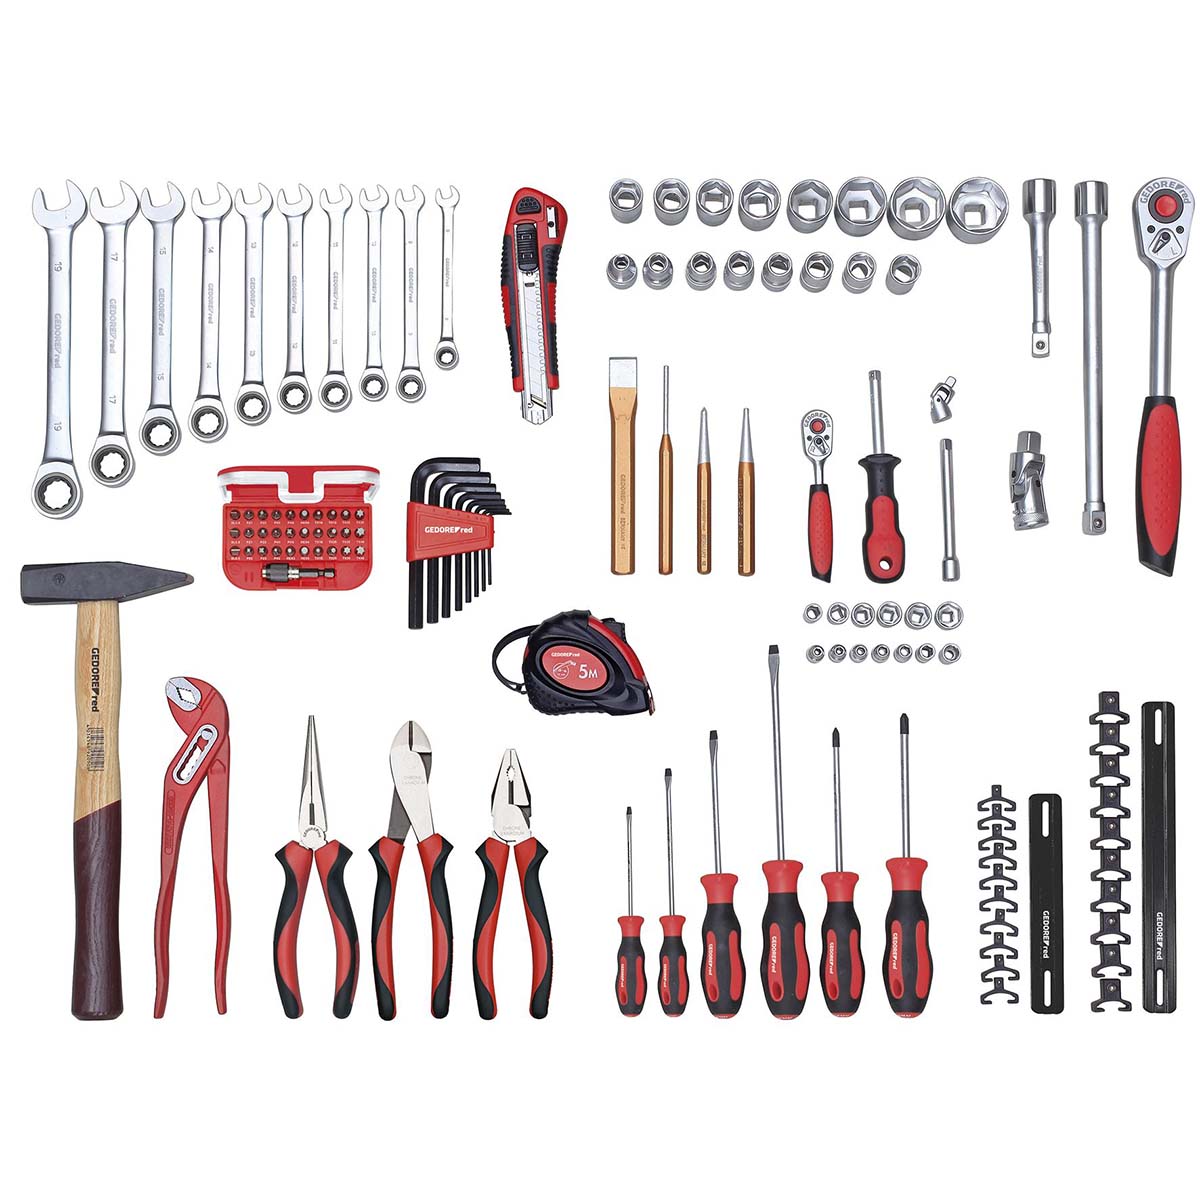 GEDORE rouge R21000108 - Coffret d'outils ALL-IN, 108 pièces, sans boîte (3301642)